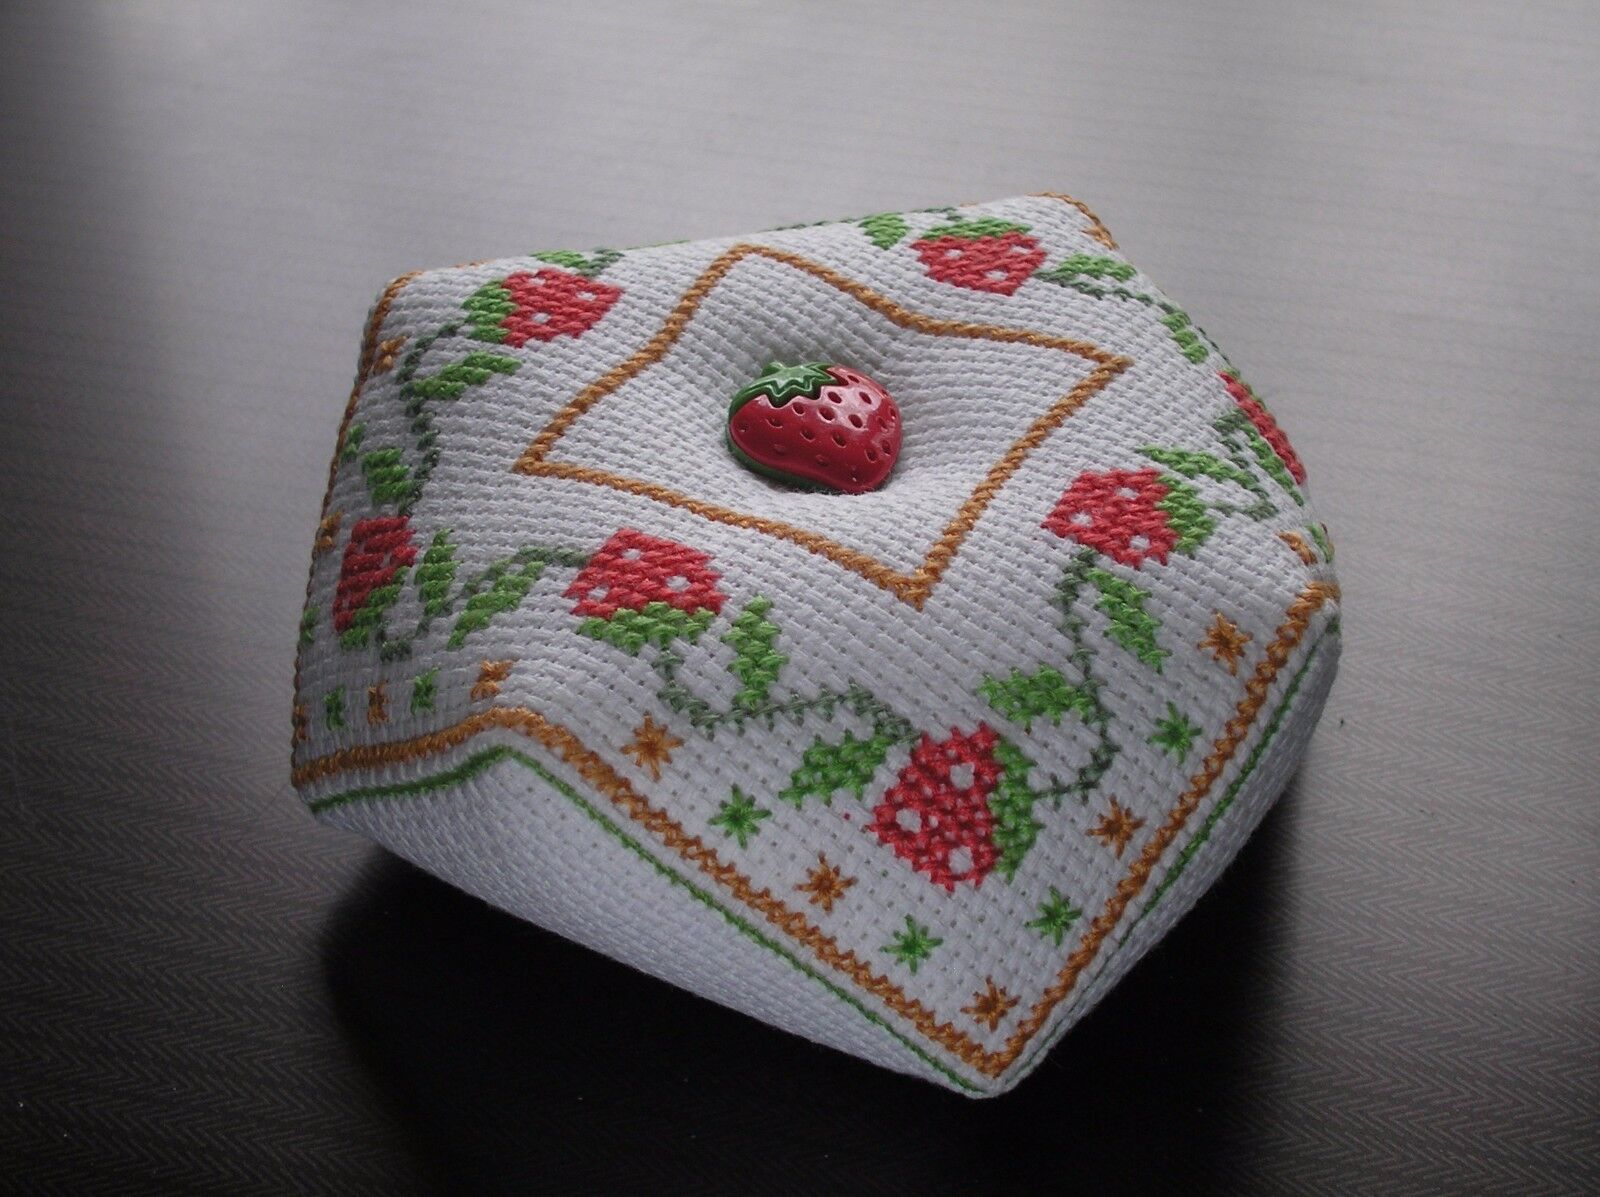 Finished Completed Cross Stitch Biscornu Pincushion strawberry